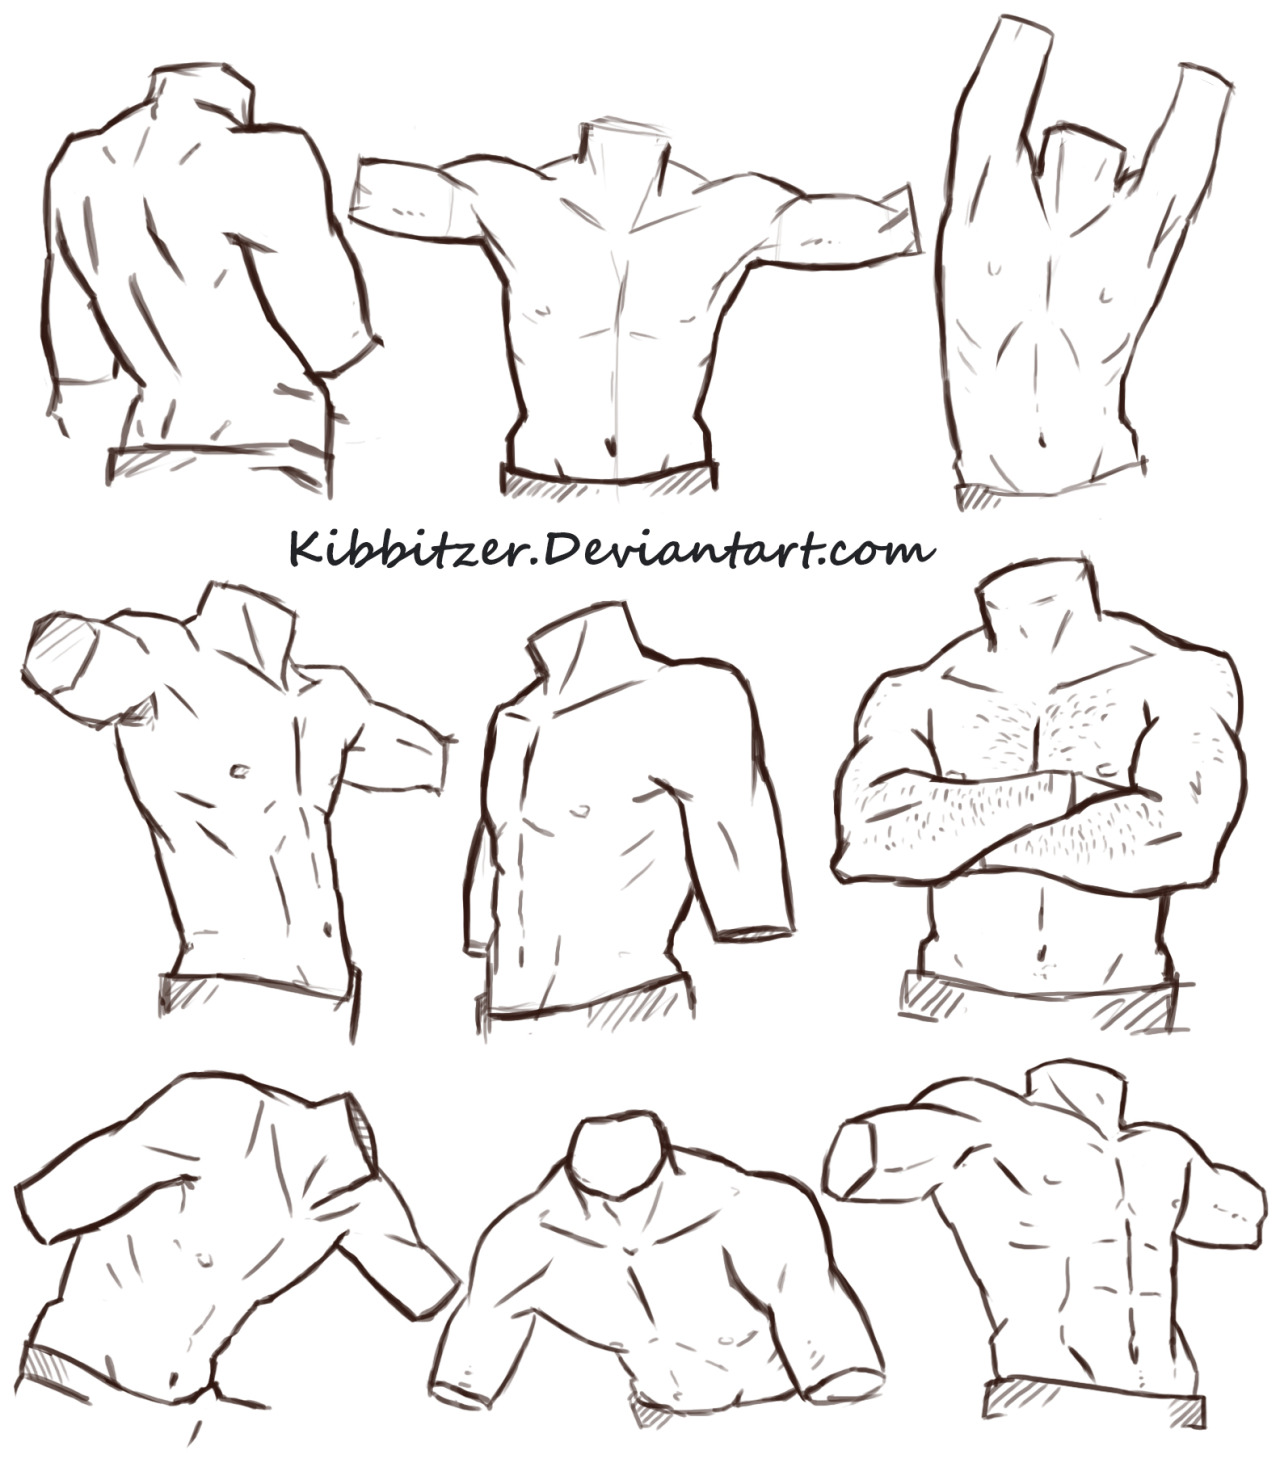 Kibbitzer - boobies are difficult to draw, sorry :'D  www.patreon.com/kibbitzer